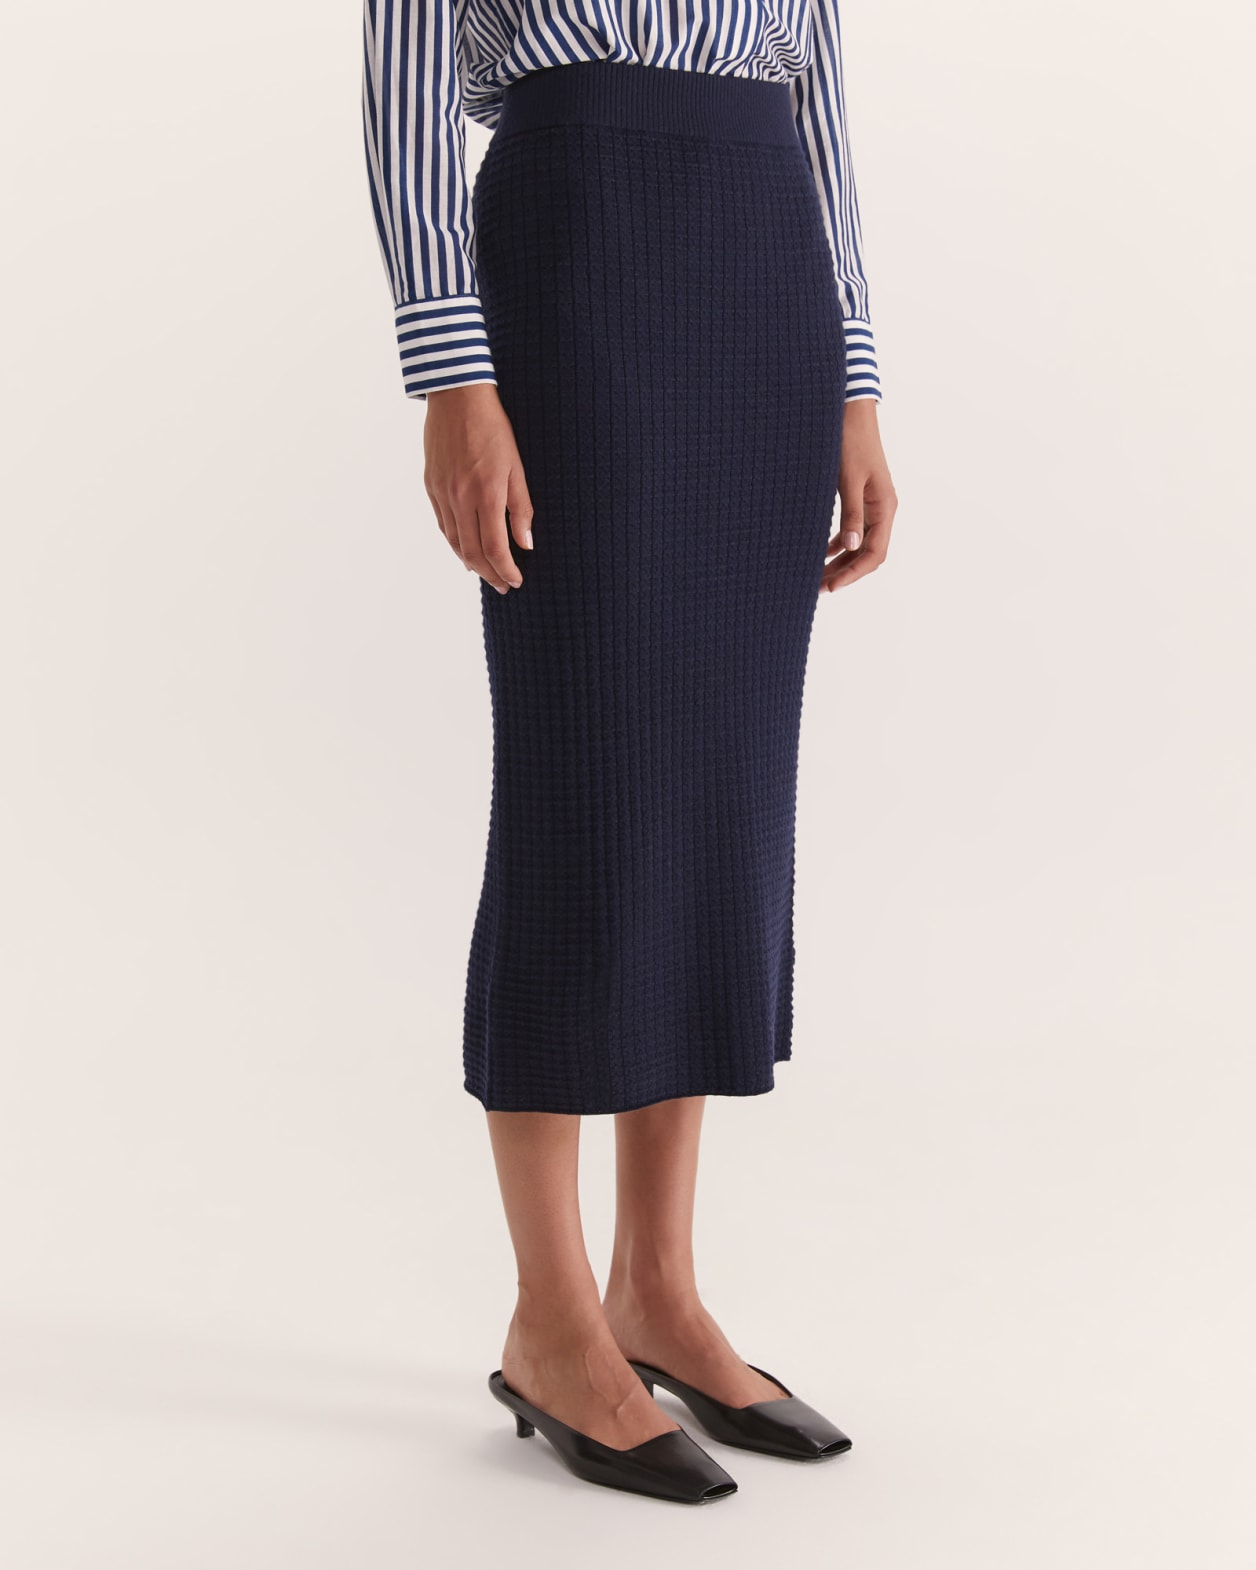 Leonie Merino Wool Knit Skirt in MIDNIGHT